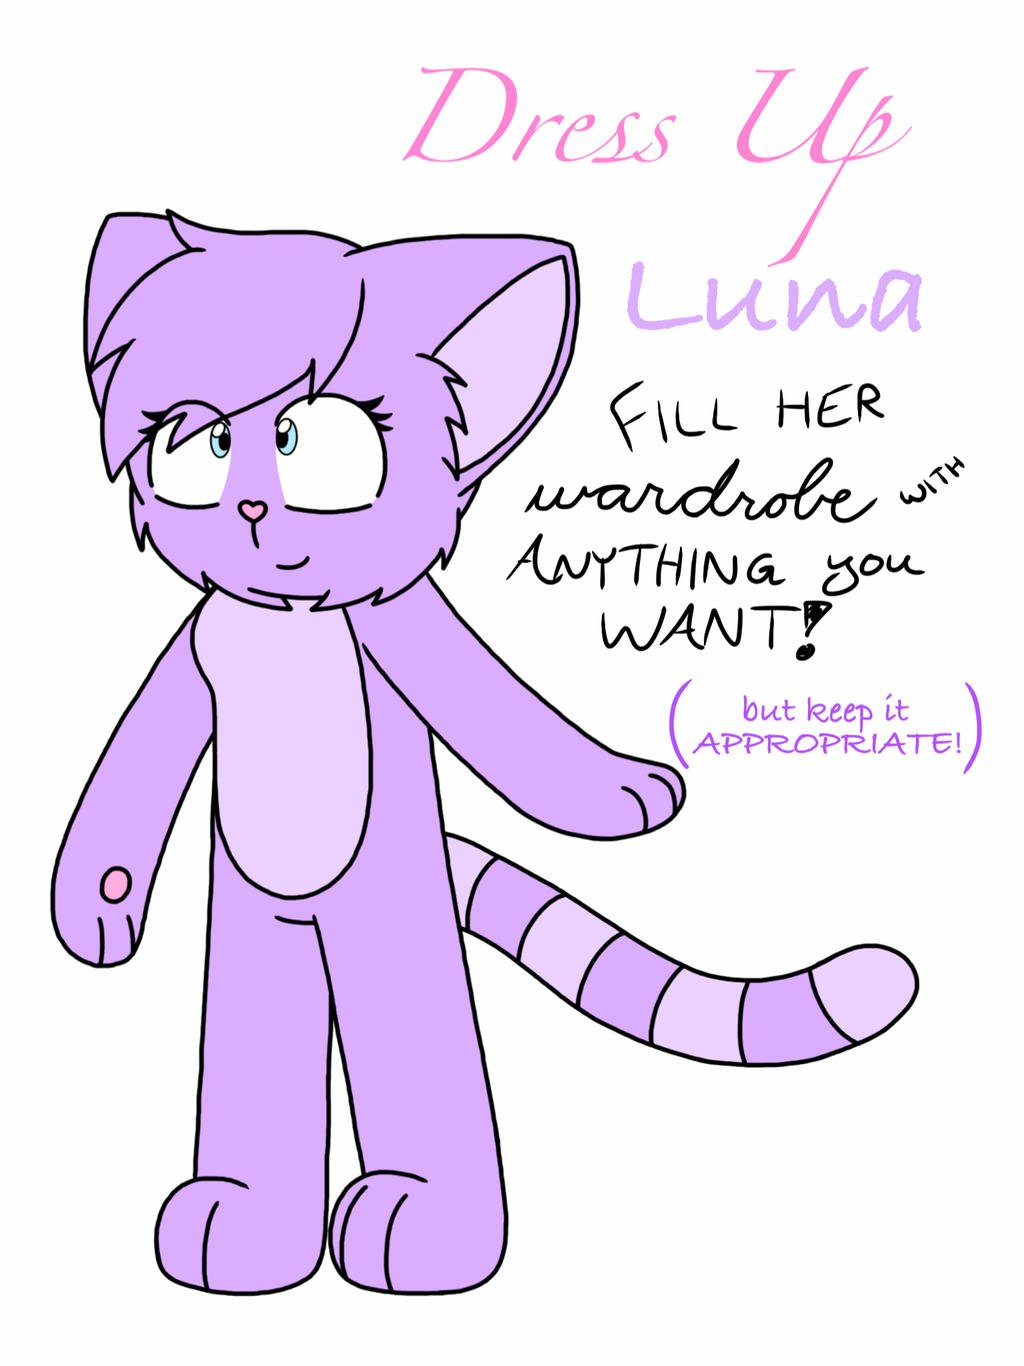 Dress Up Luna!